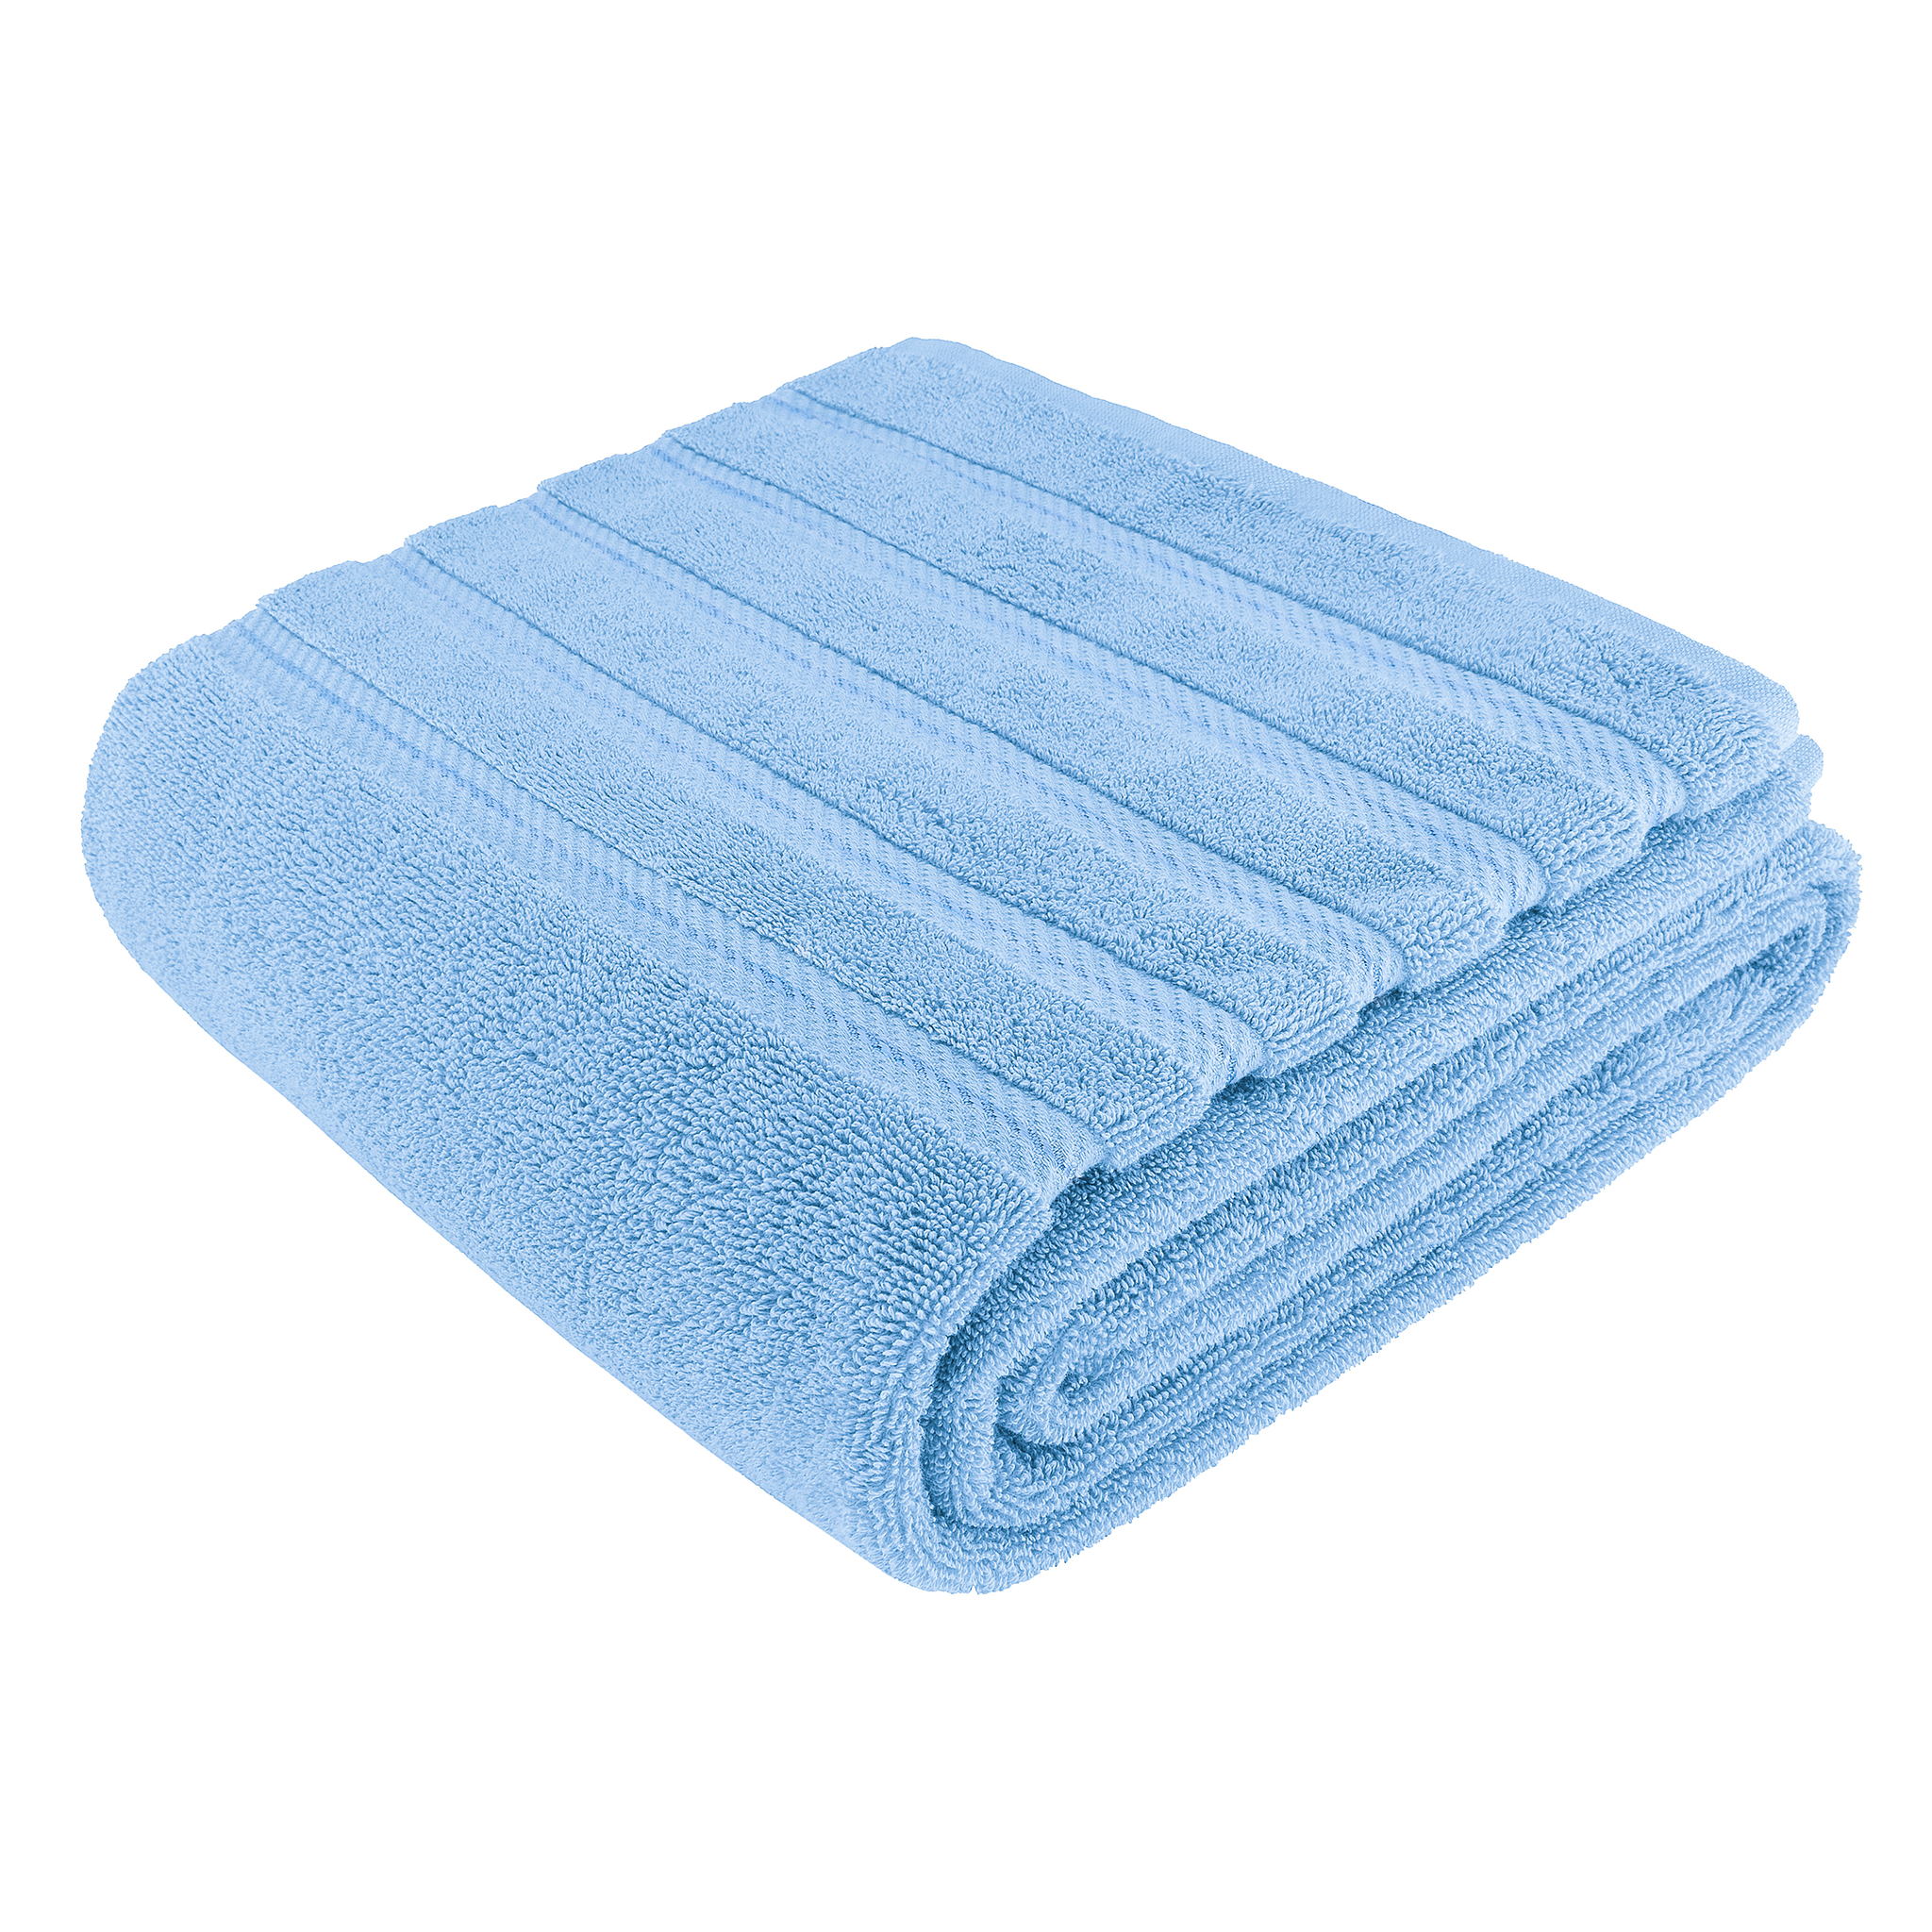 American Soft Linen - 35x70 Jumbo Bath Sheet Turkish Bath Towel - 16 Piece Case Pack - Sky-Blue - 7